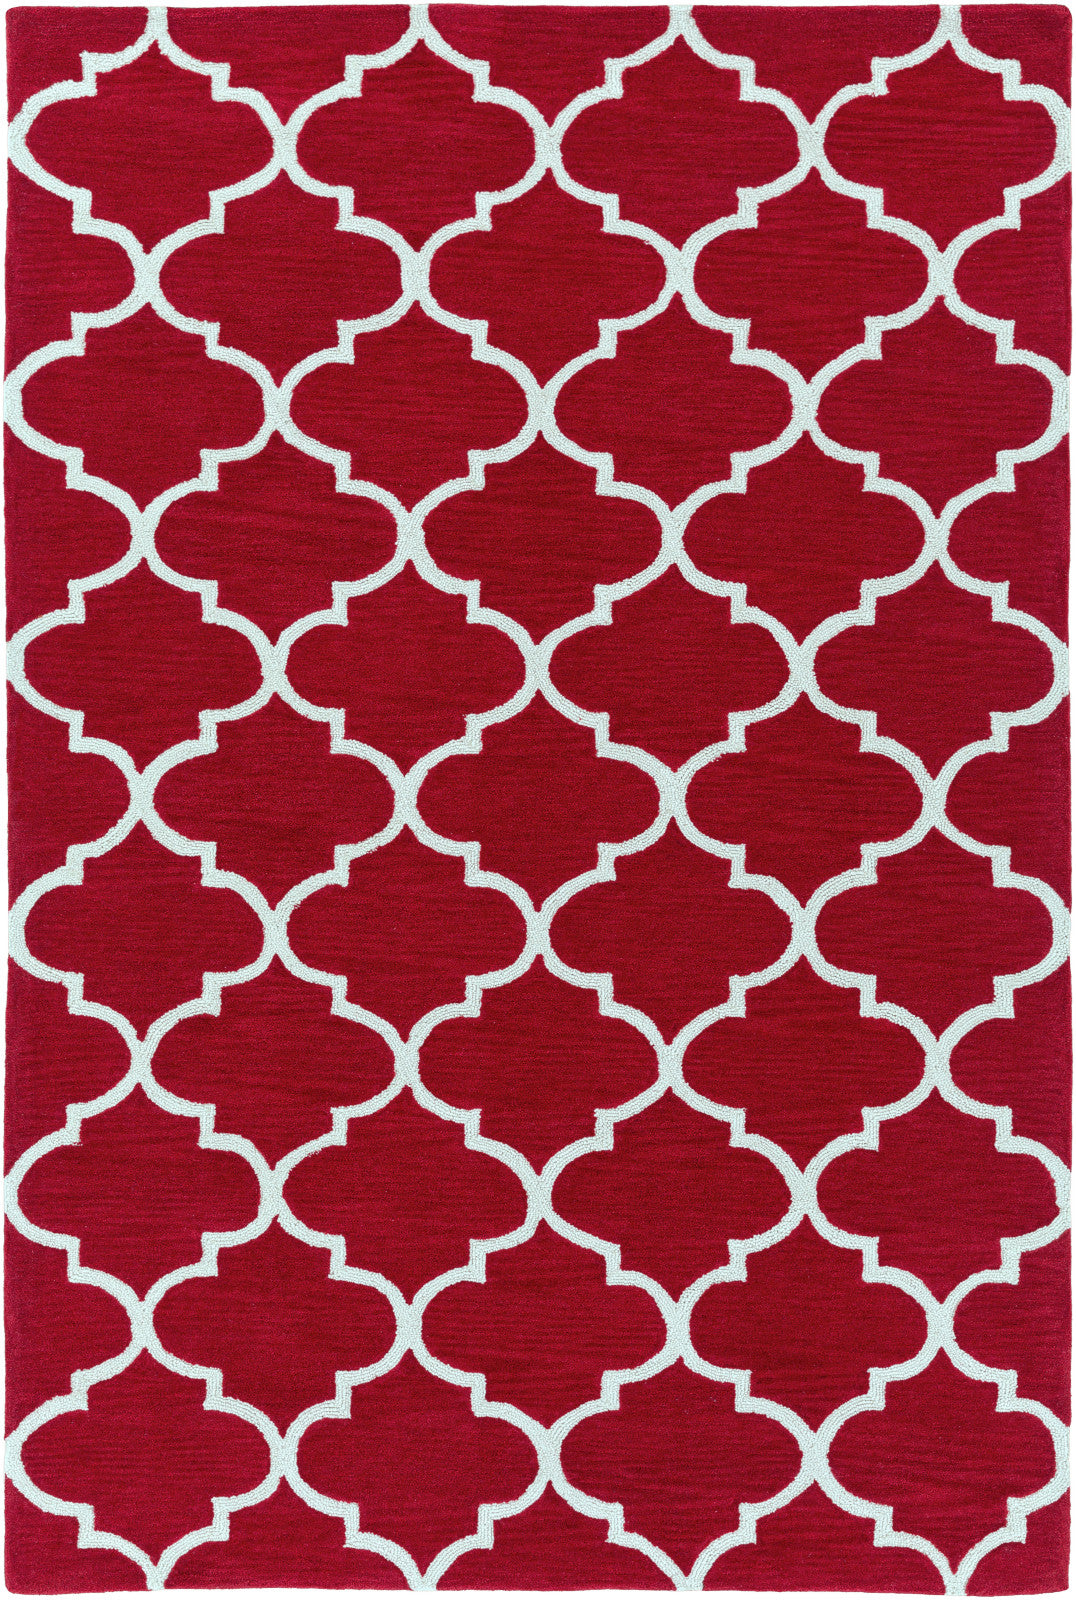 Artistic Weavers Holden Finley Crimson Red/Ivory Area Rug main image